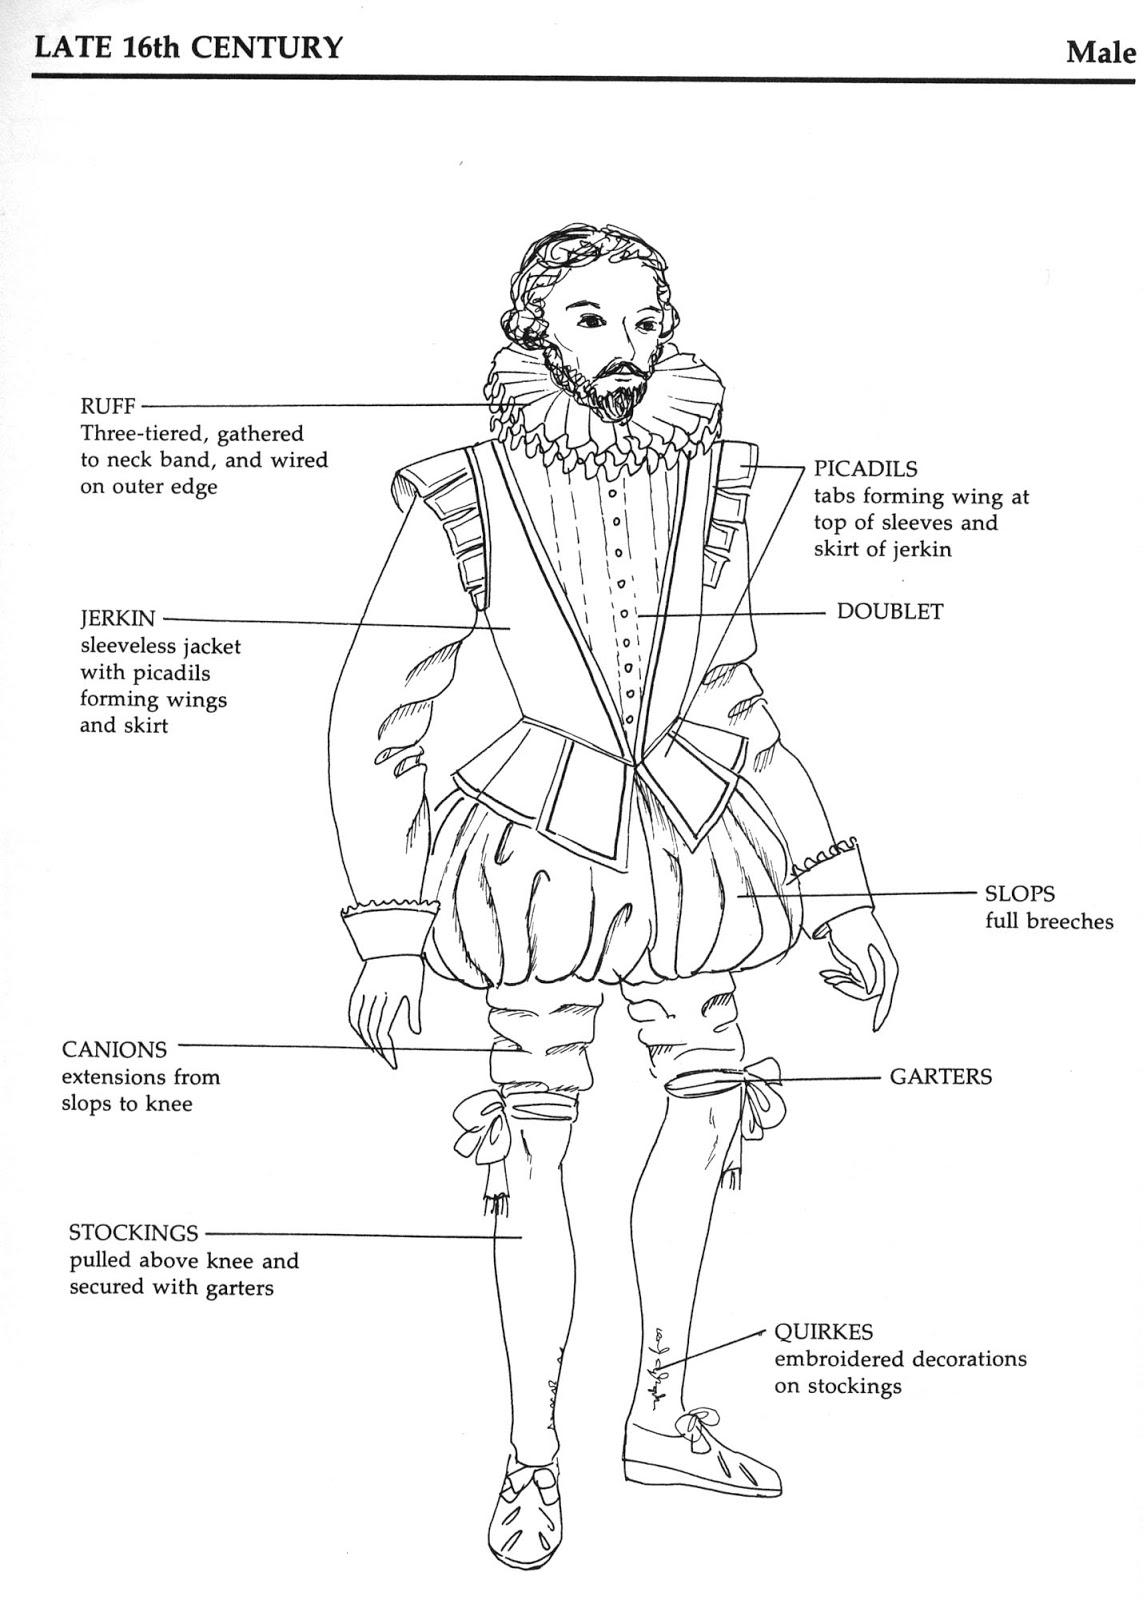 Элементы мужского костюма эпохи Барокко